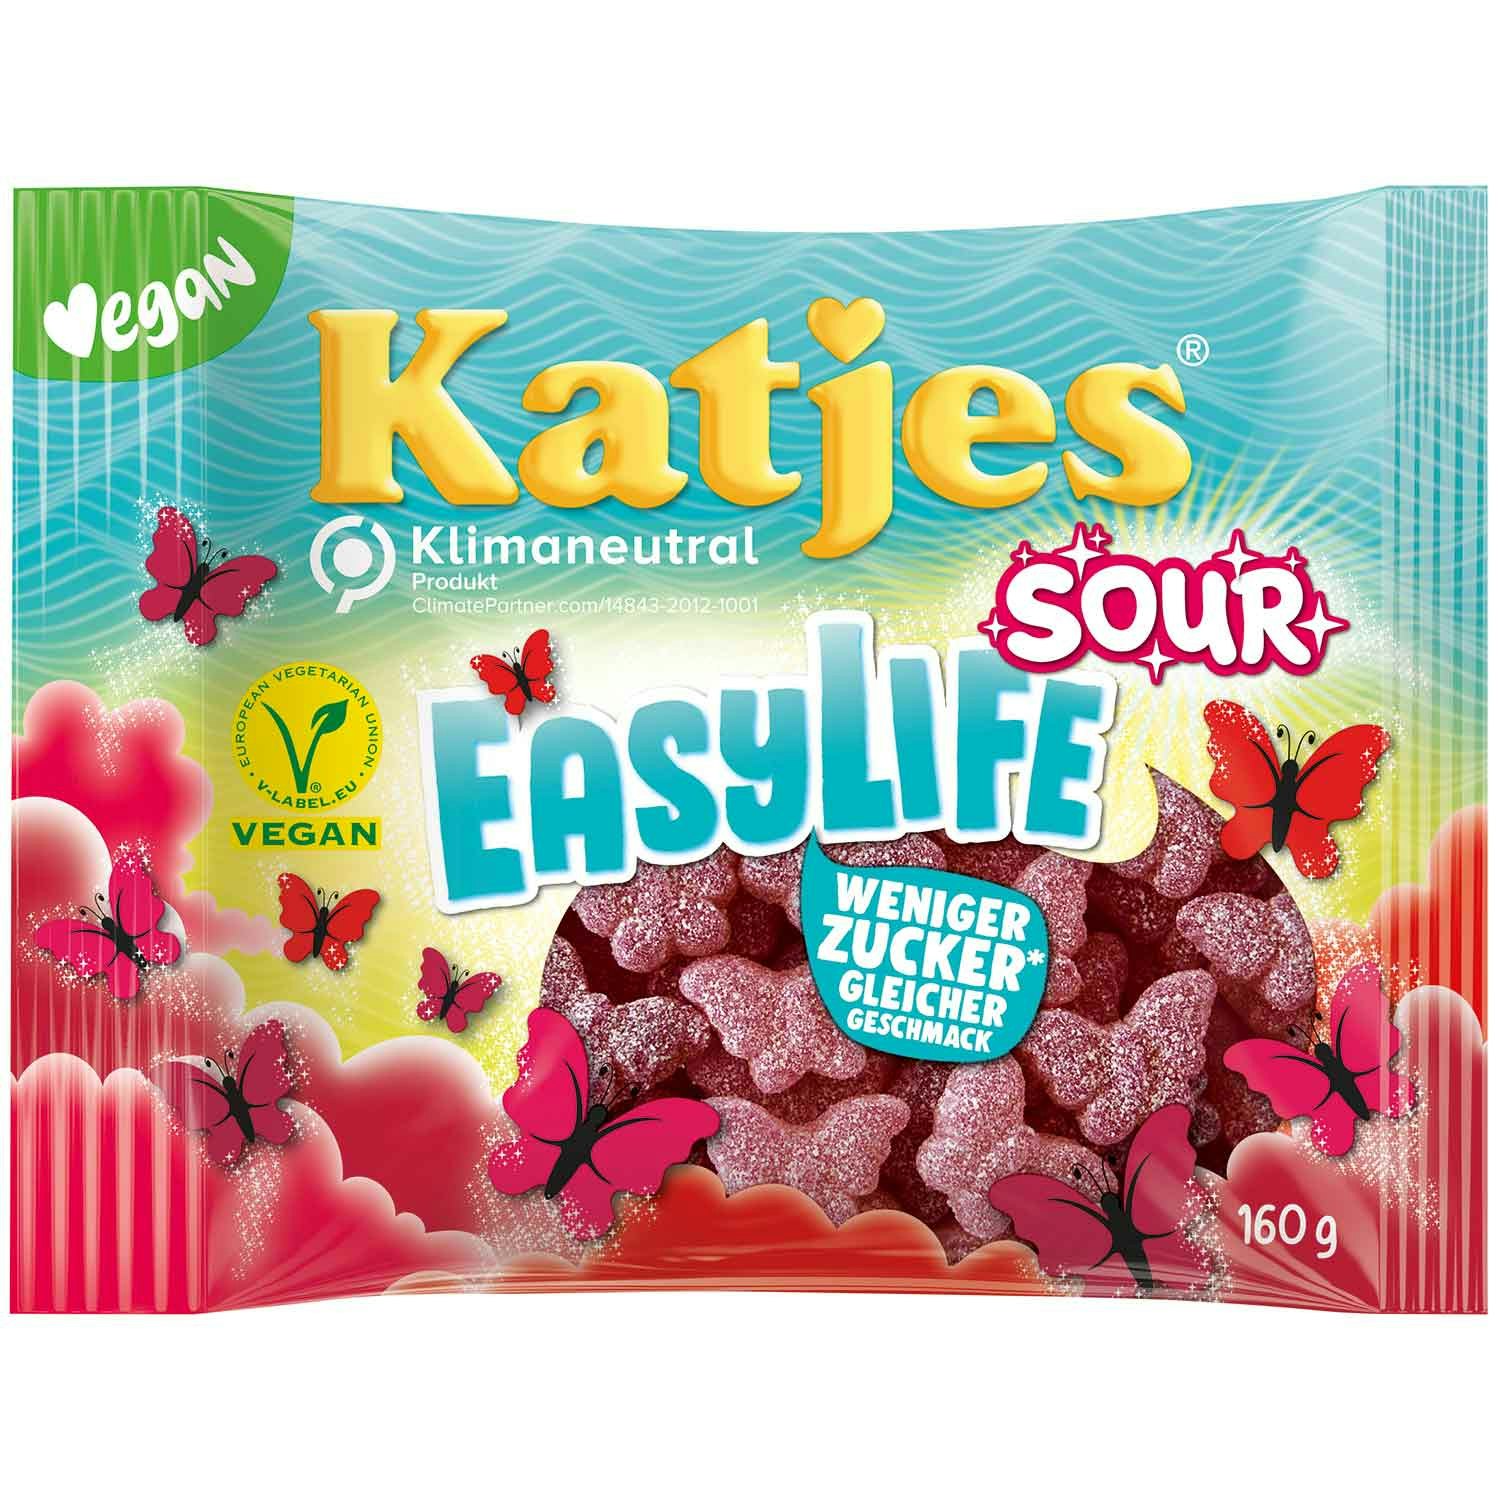 Katjes - Easy Life Sour, surt Fruktgummi, 160g